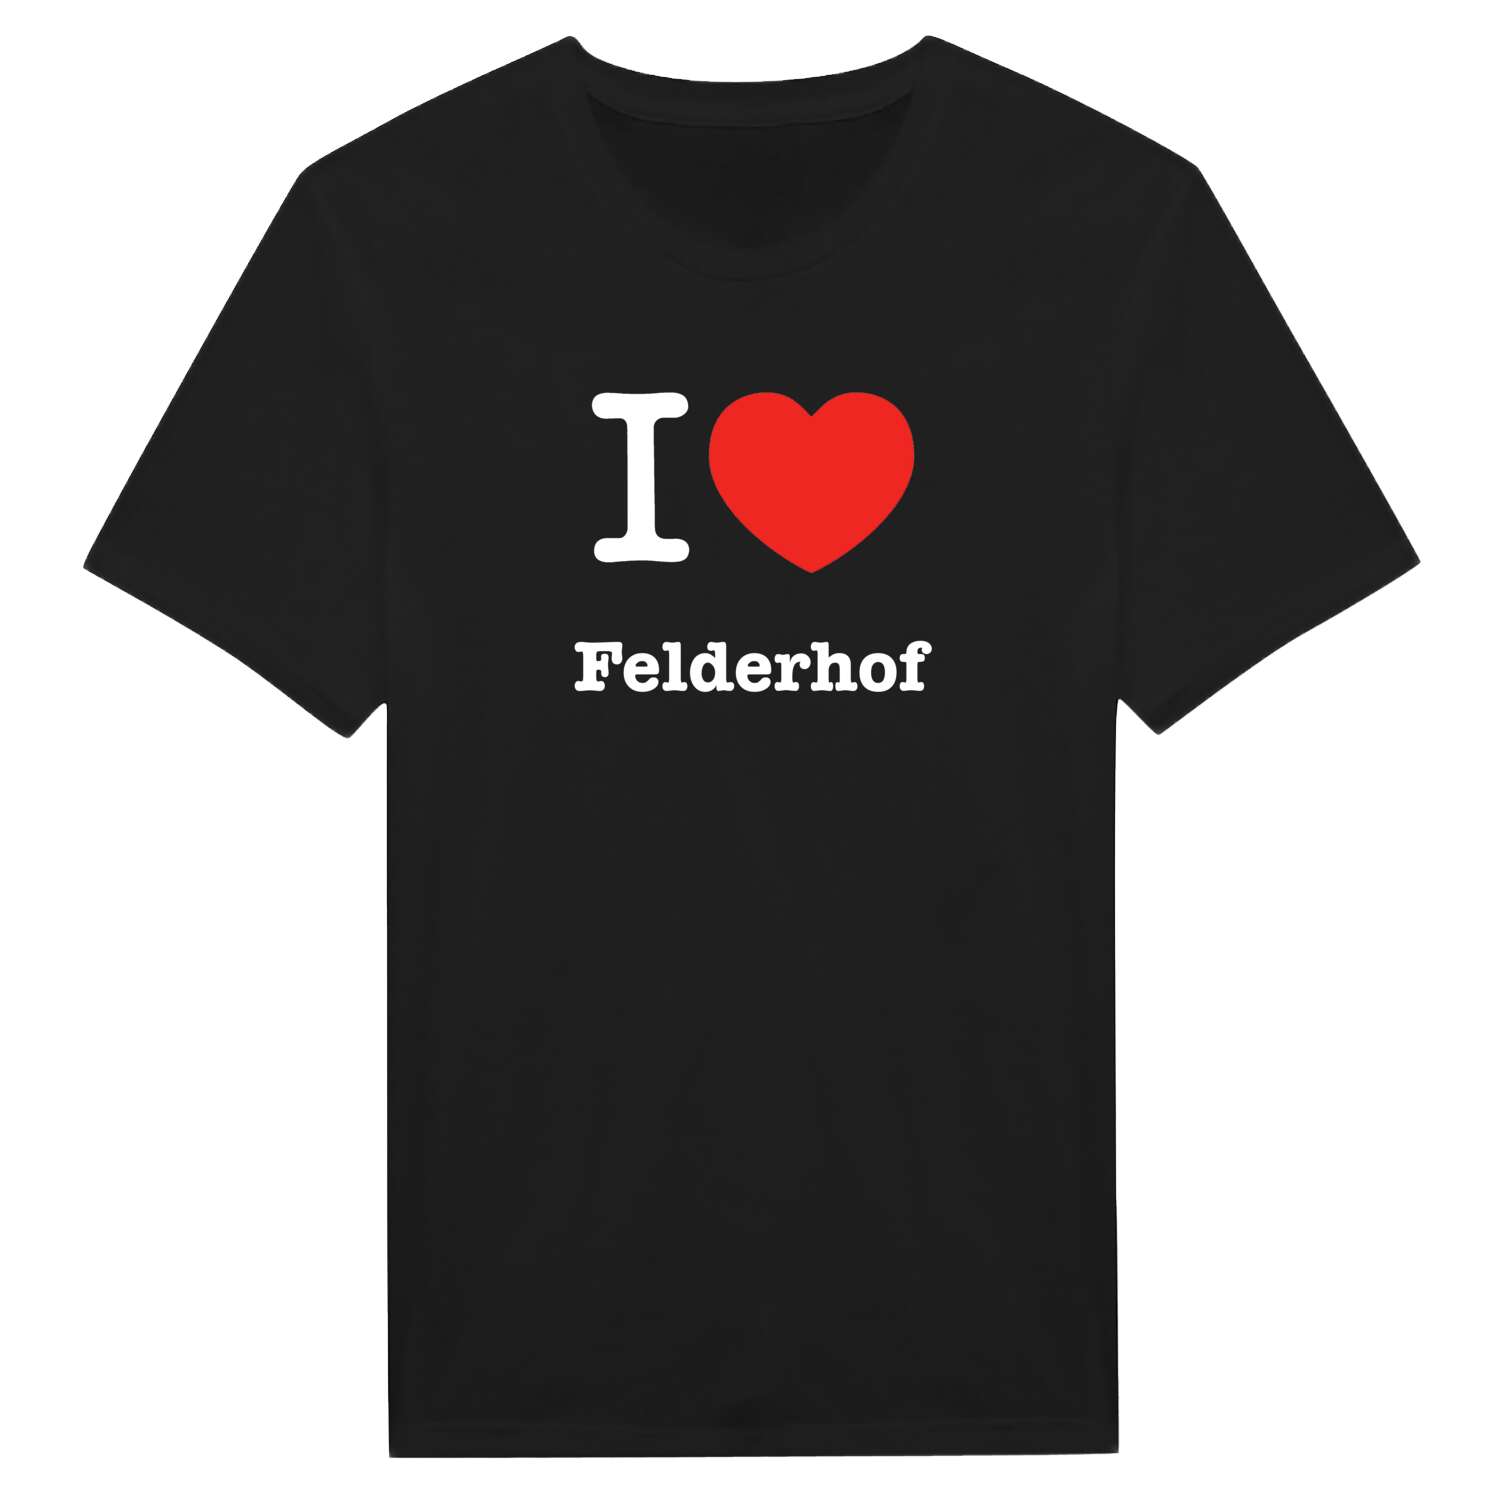 Felderhof T-Shirt »I love«